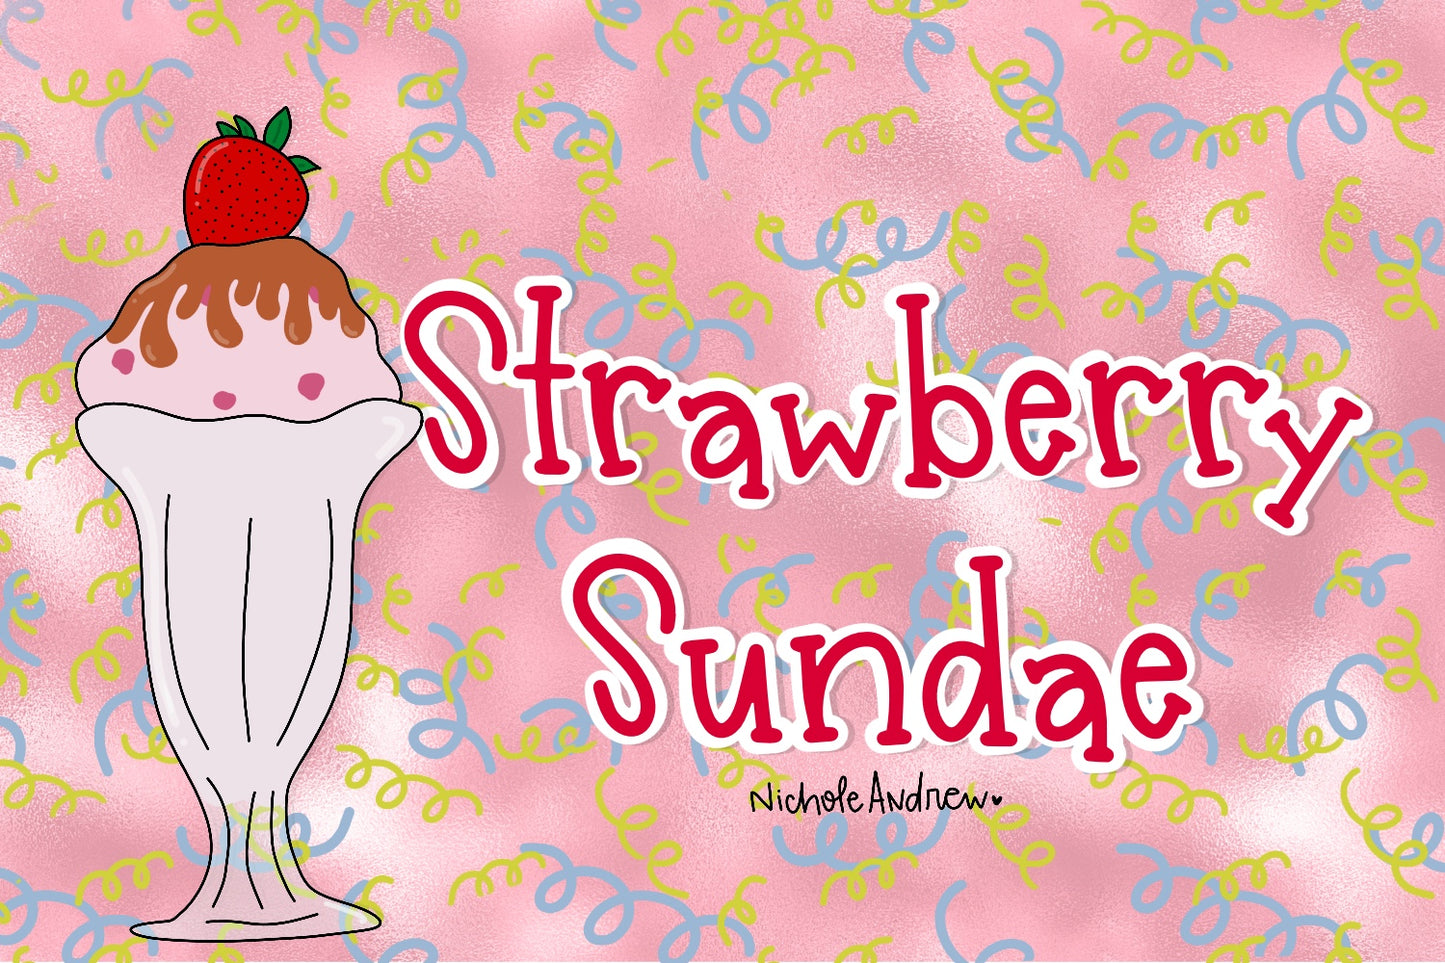 Strawberry Sundae - A Quirky Handwritten Font